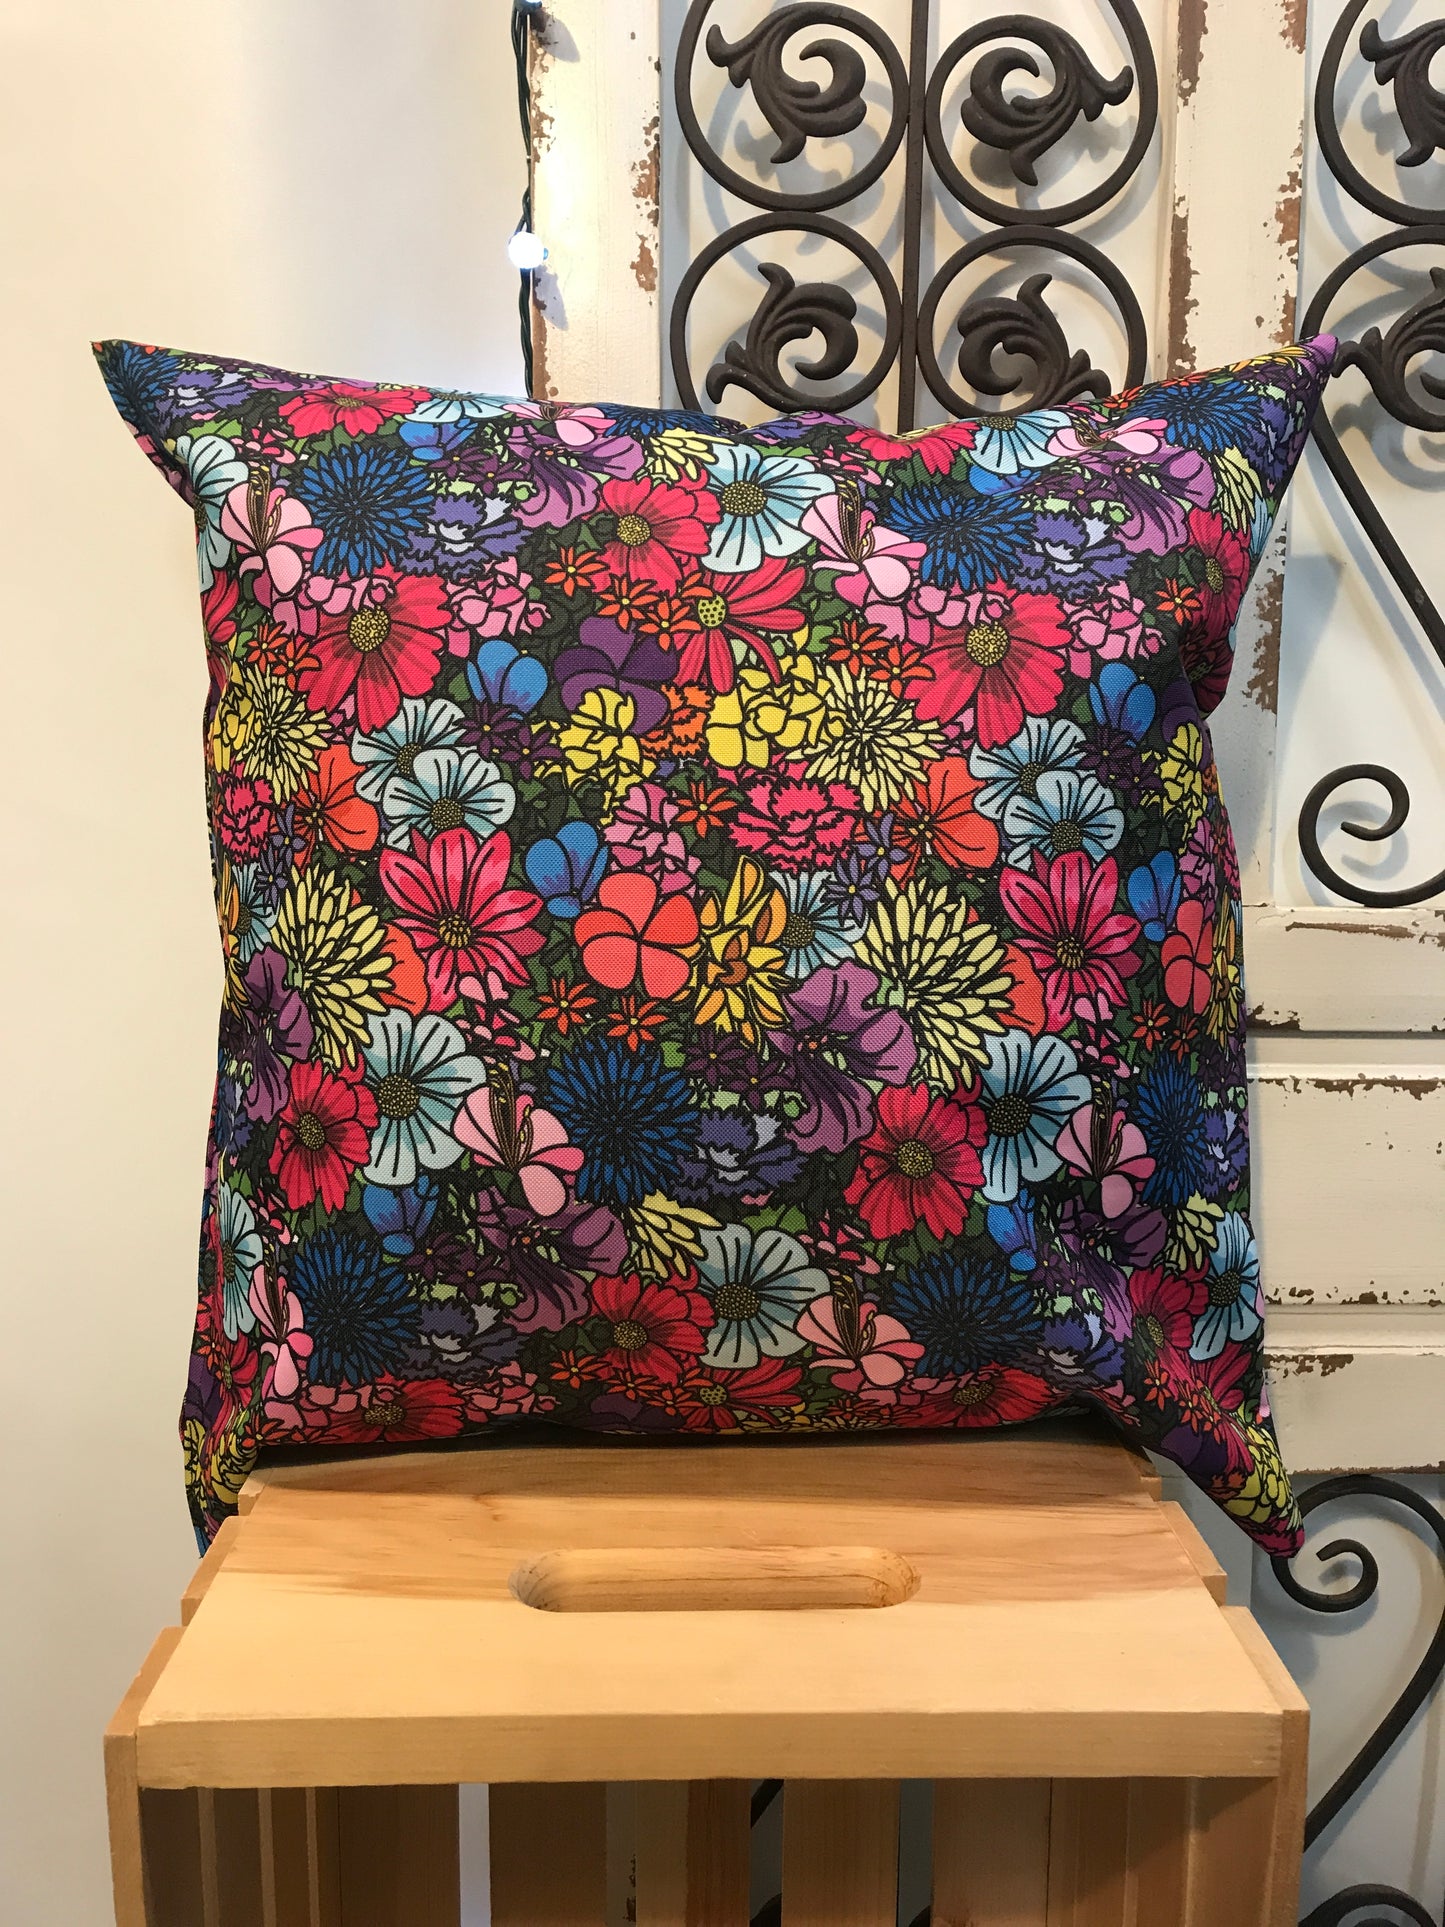 20" Wildflower Multi-Color Pillow Cover - InRugCo Studio & Gift Shop